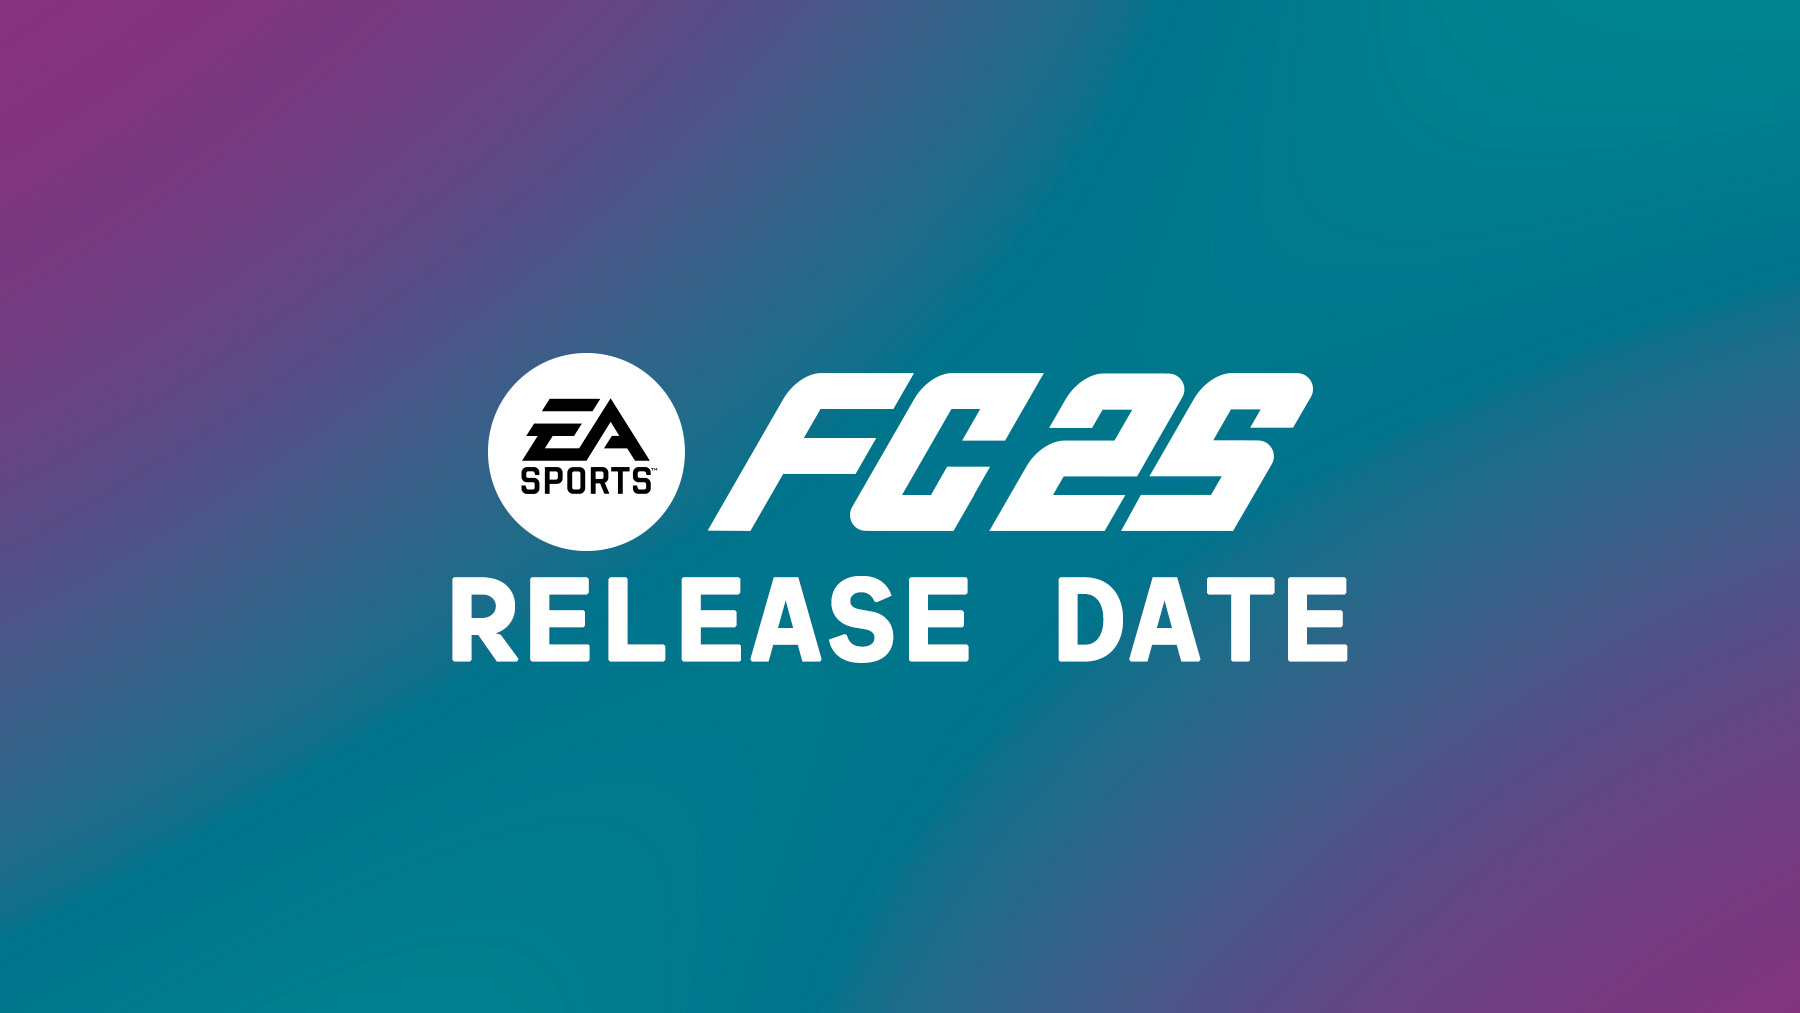 EA FC 25 Release Date